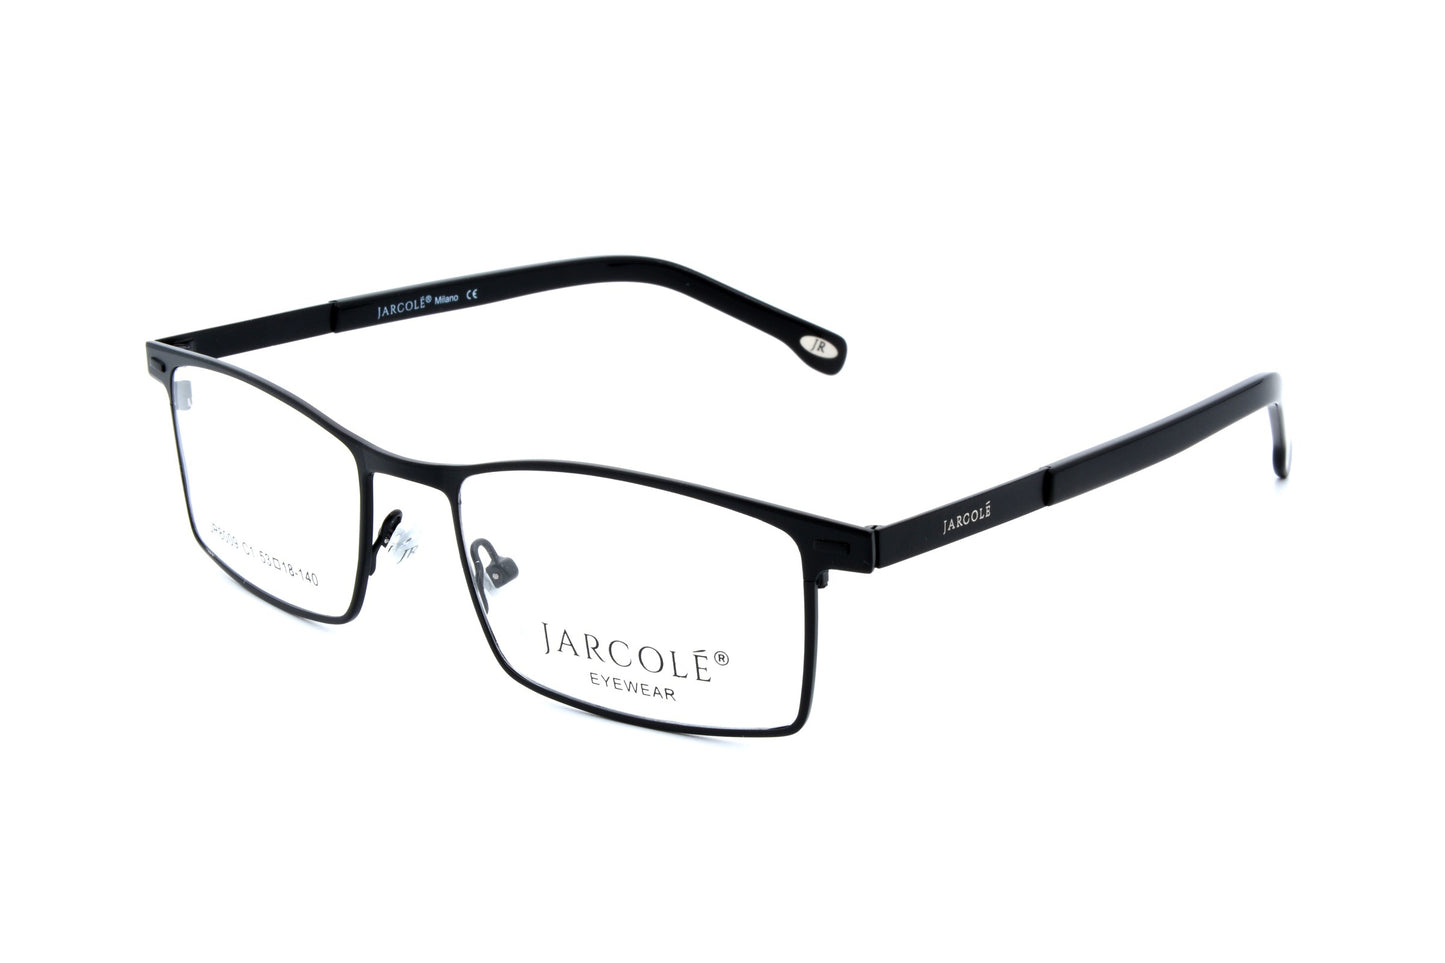 Jarcole eyewear 8009, C1 - Optics Trading